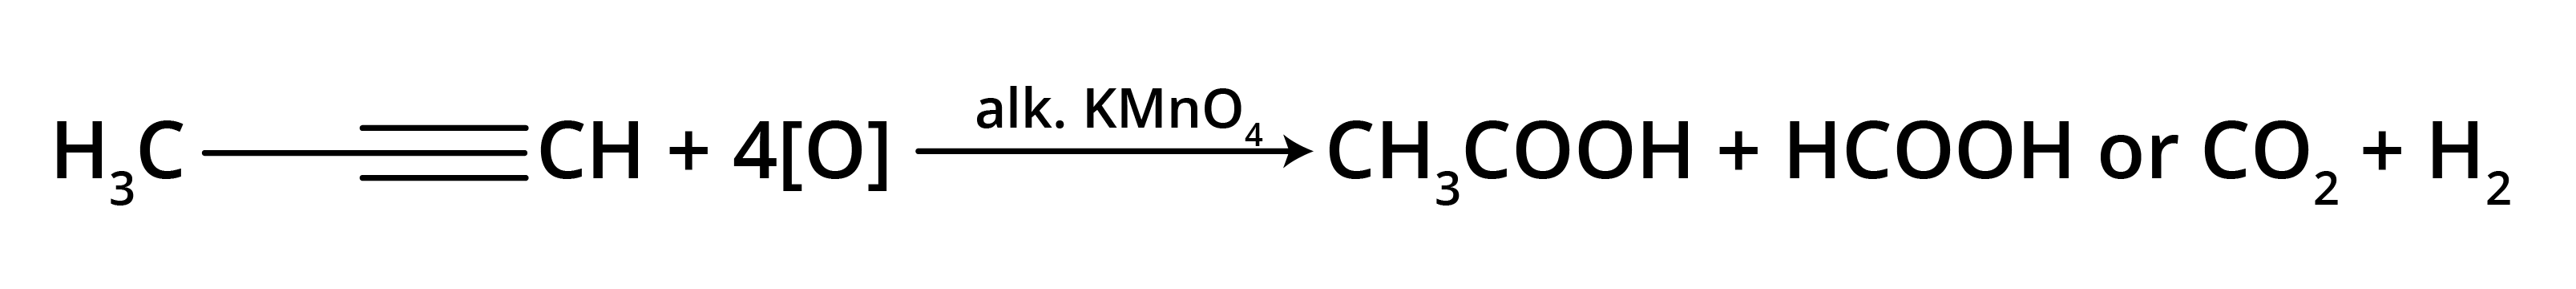 Oxidation of Alkyne